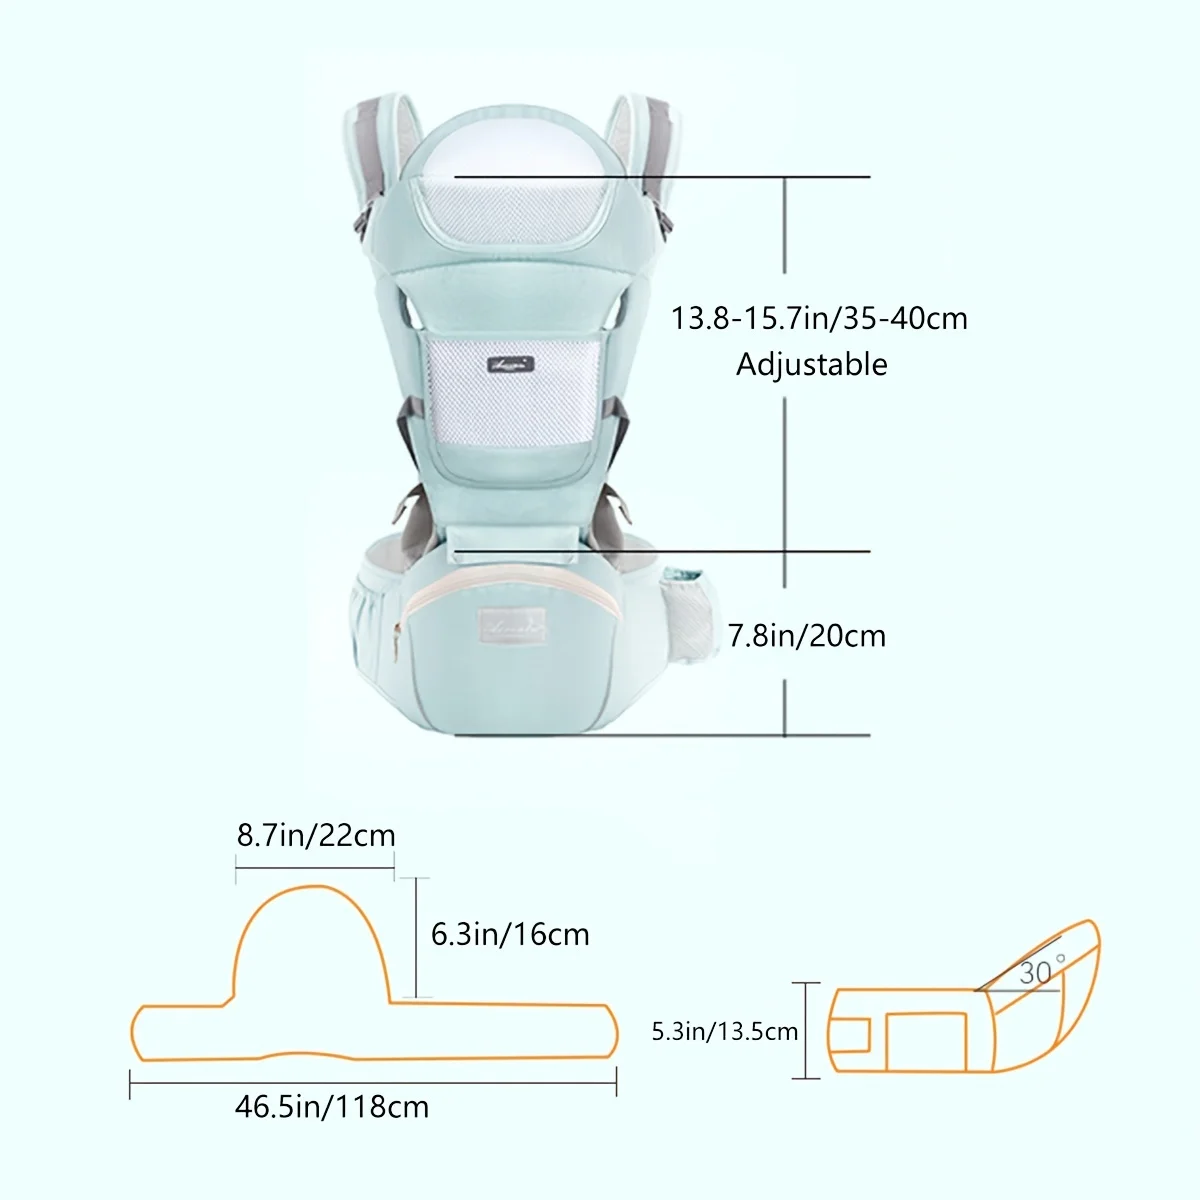 Детска переноска от висококачествен чист памук - удобно носене на вашето бебе 0-36 месеца!3